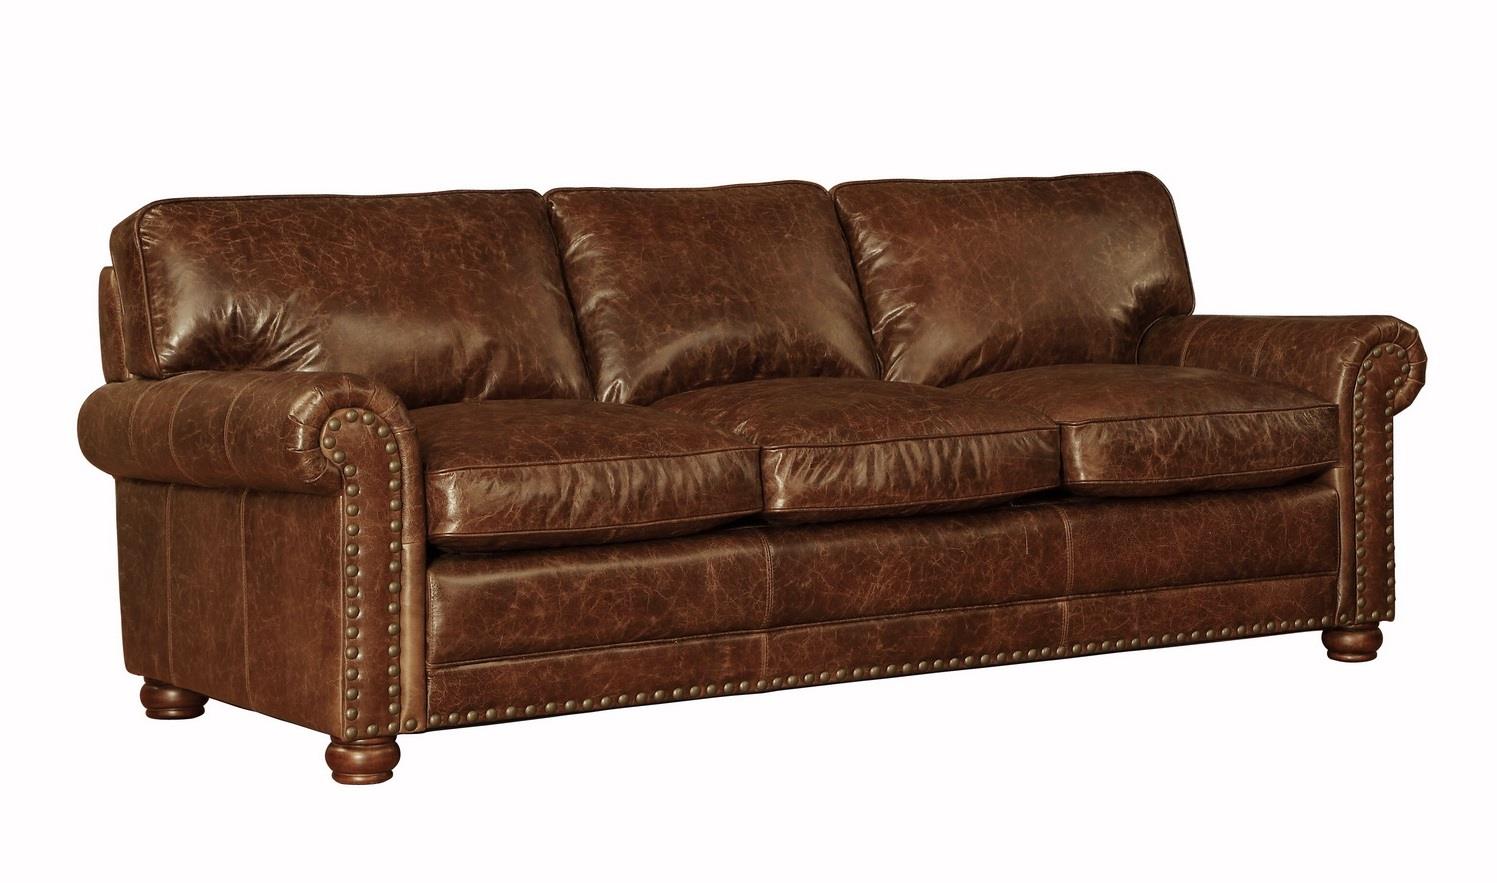 Hardwick 1001n Leather Sofa In Cocoa, Brompton Leather Sectional